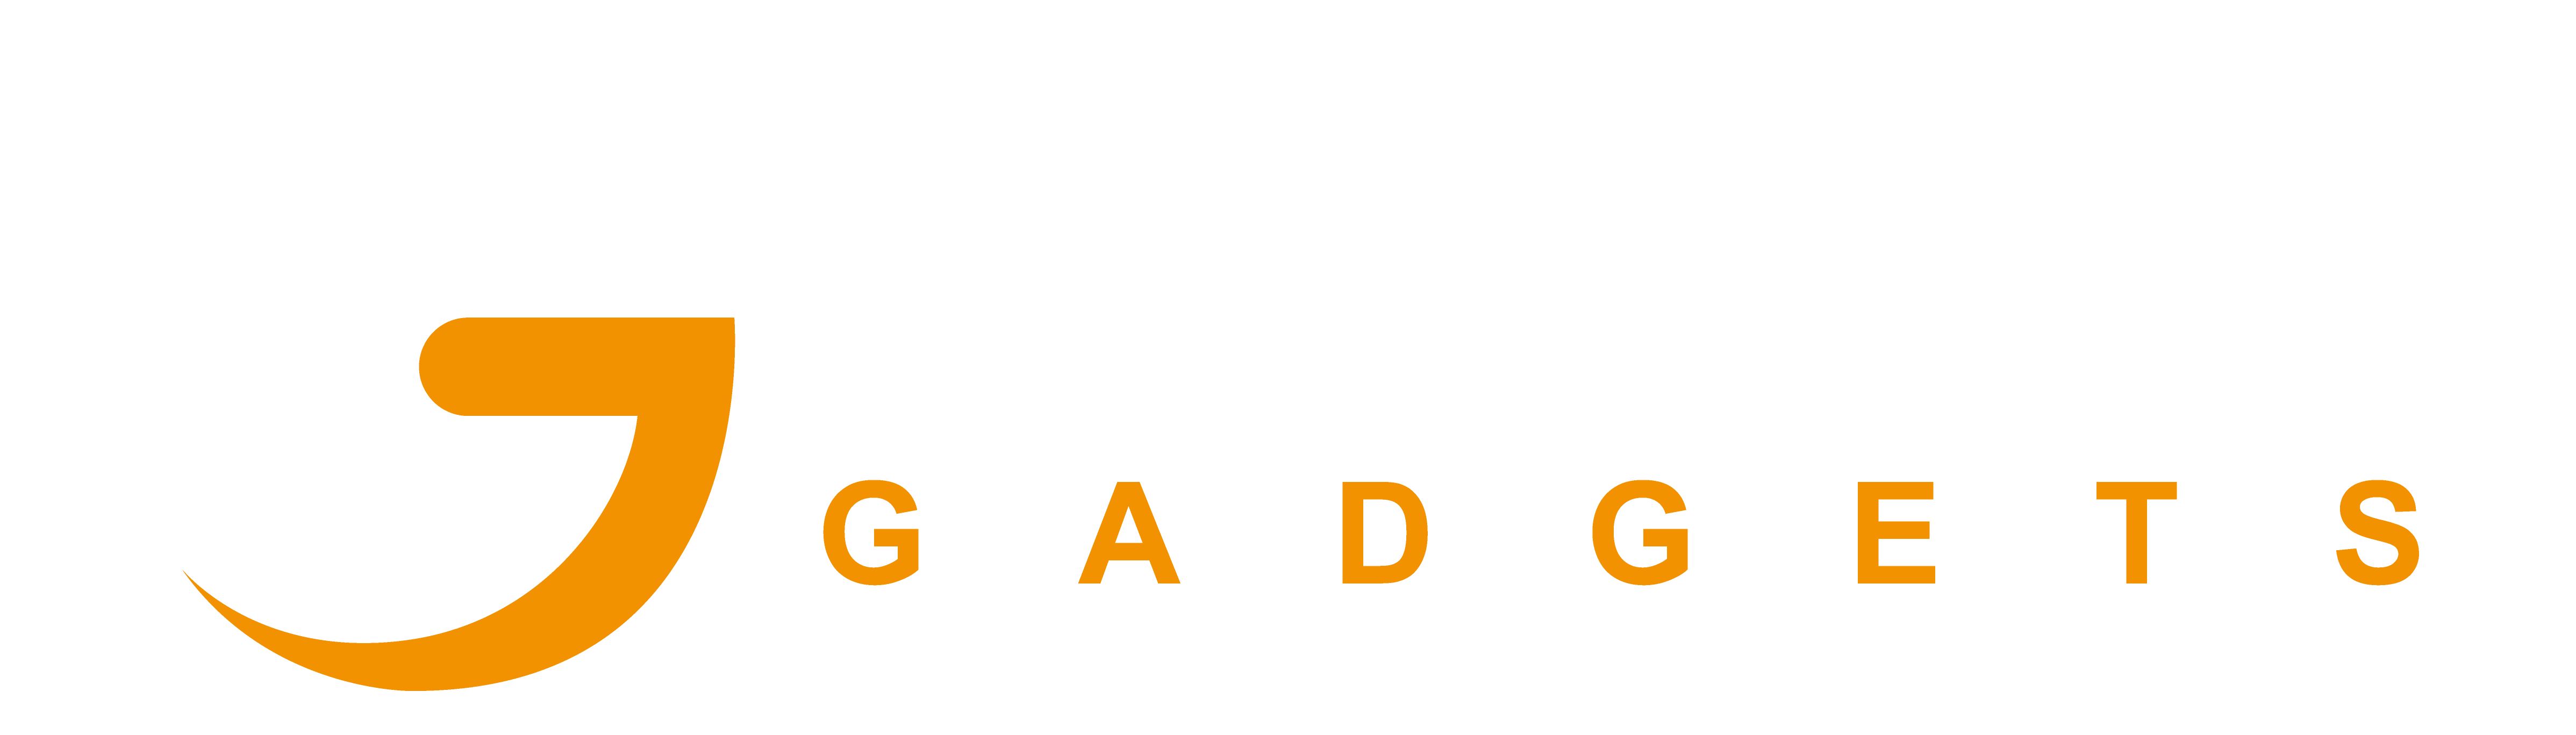 Elegantgadgets- The Leading Gadgets Shop in Bangladesh.